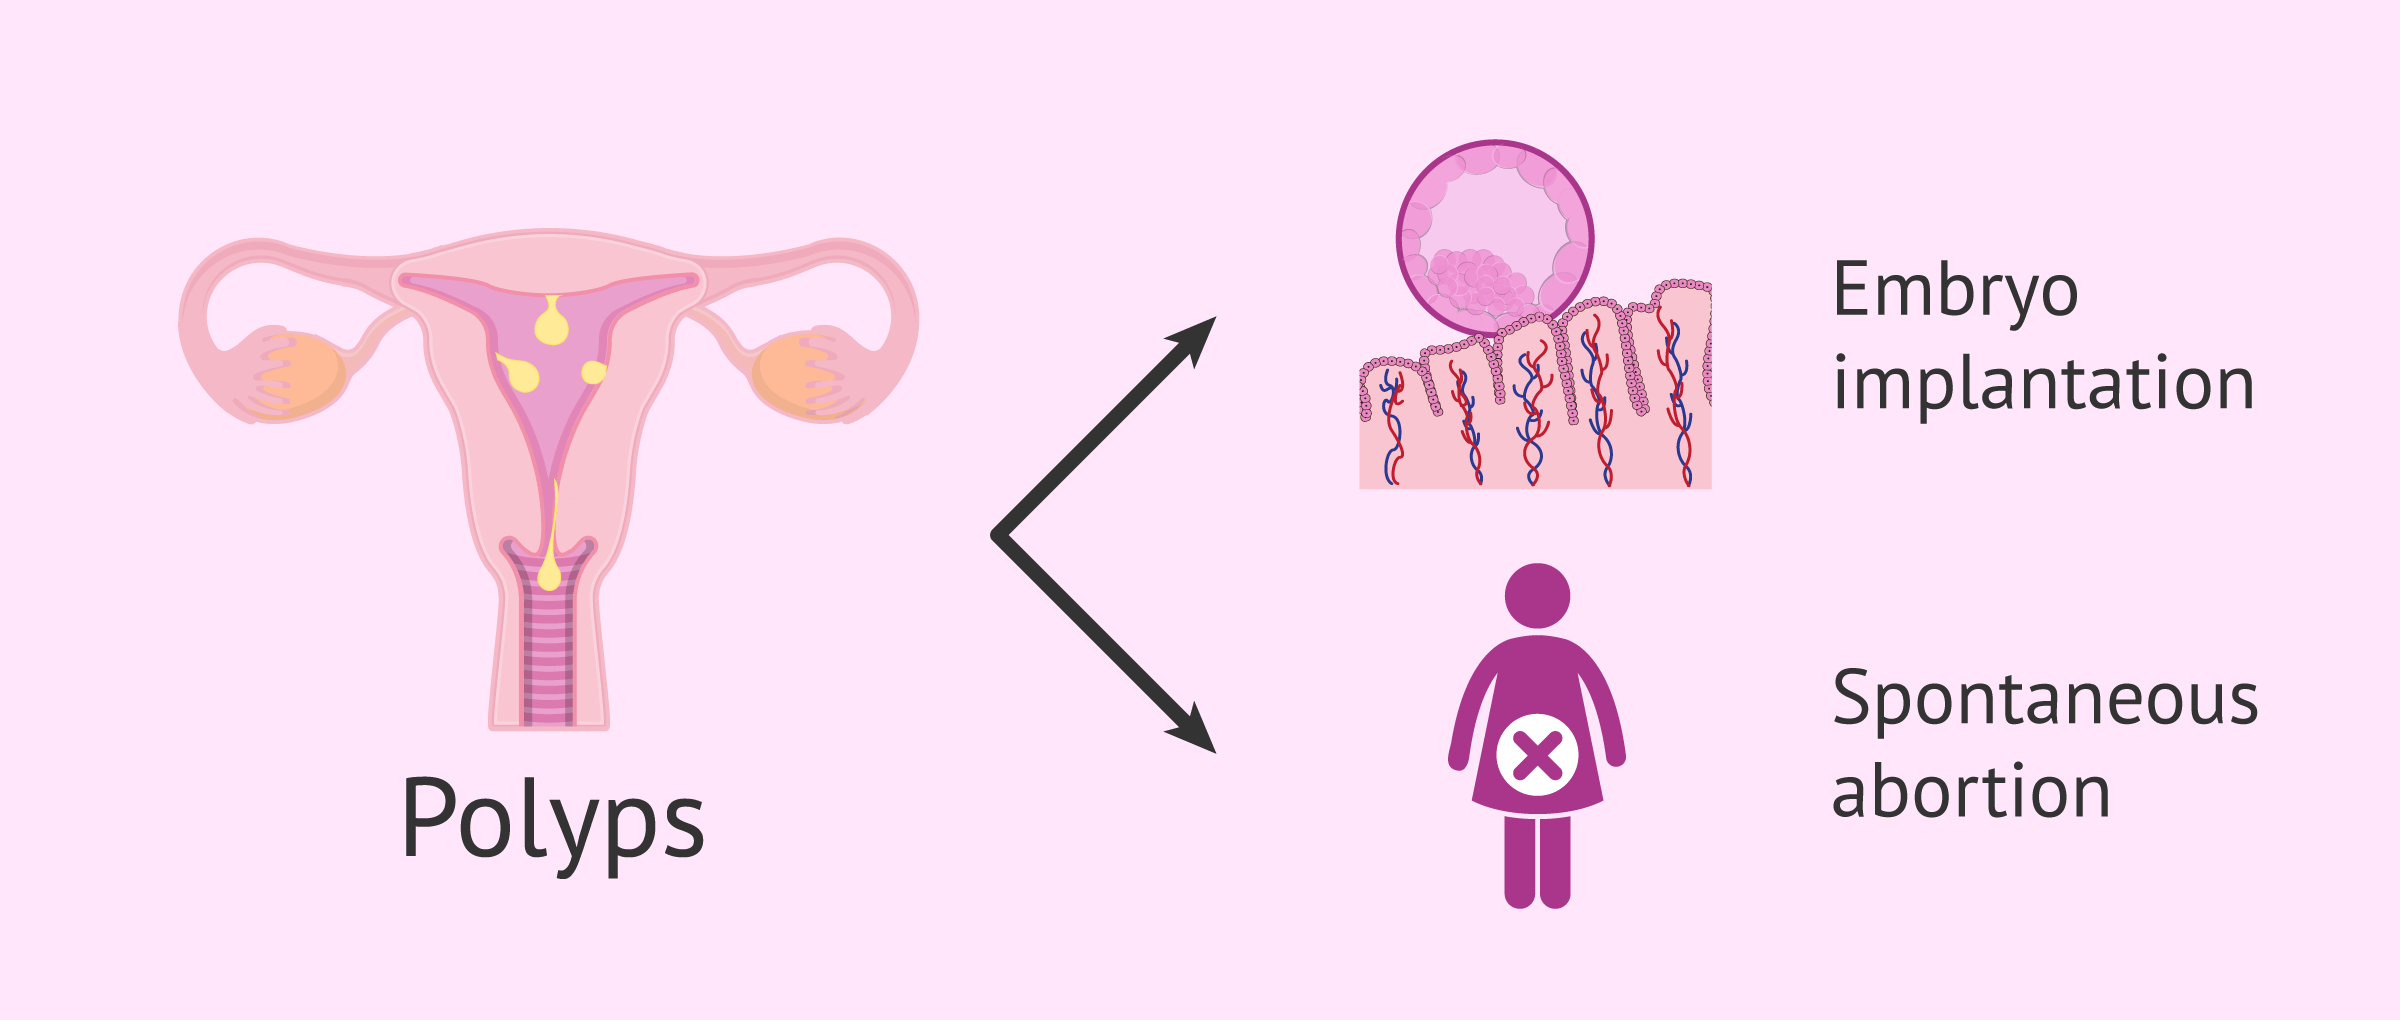 Uterine polyps and fertility